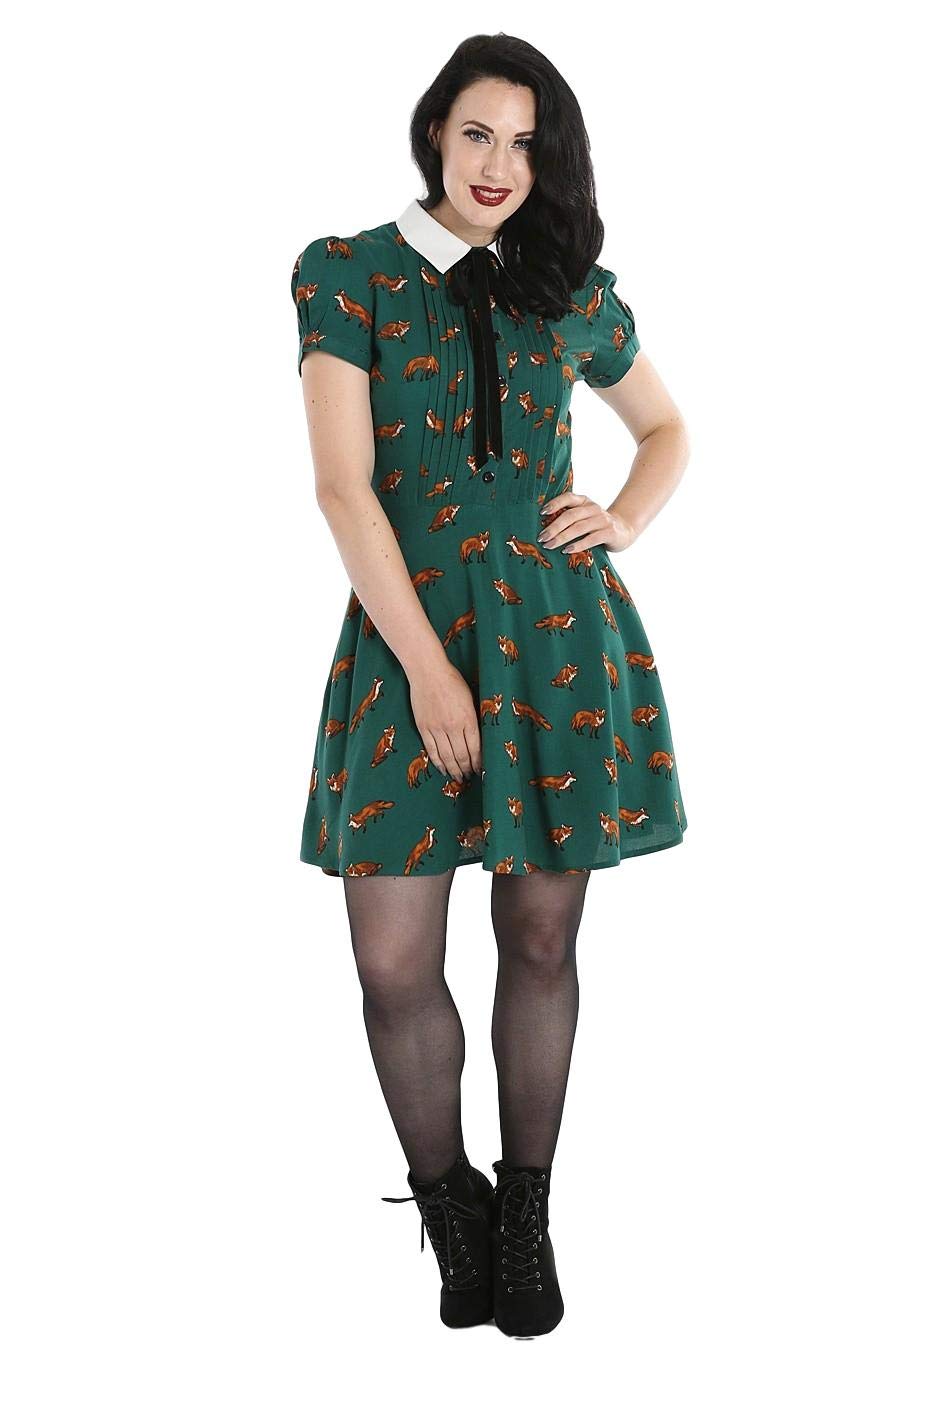 Hell-Bunny Vixey Fuchs 1960er Jahre Vintage Retro Kleid - Grün (L)